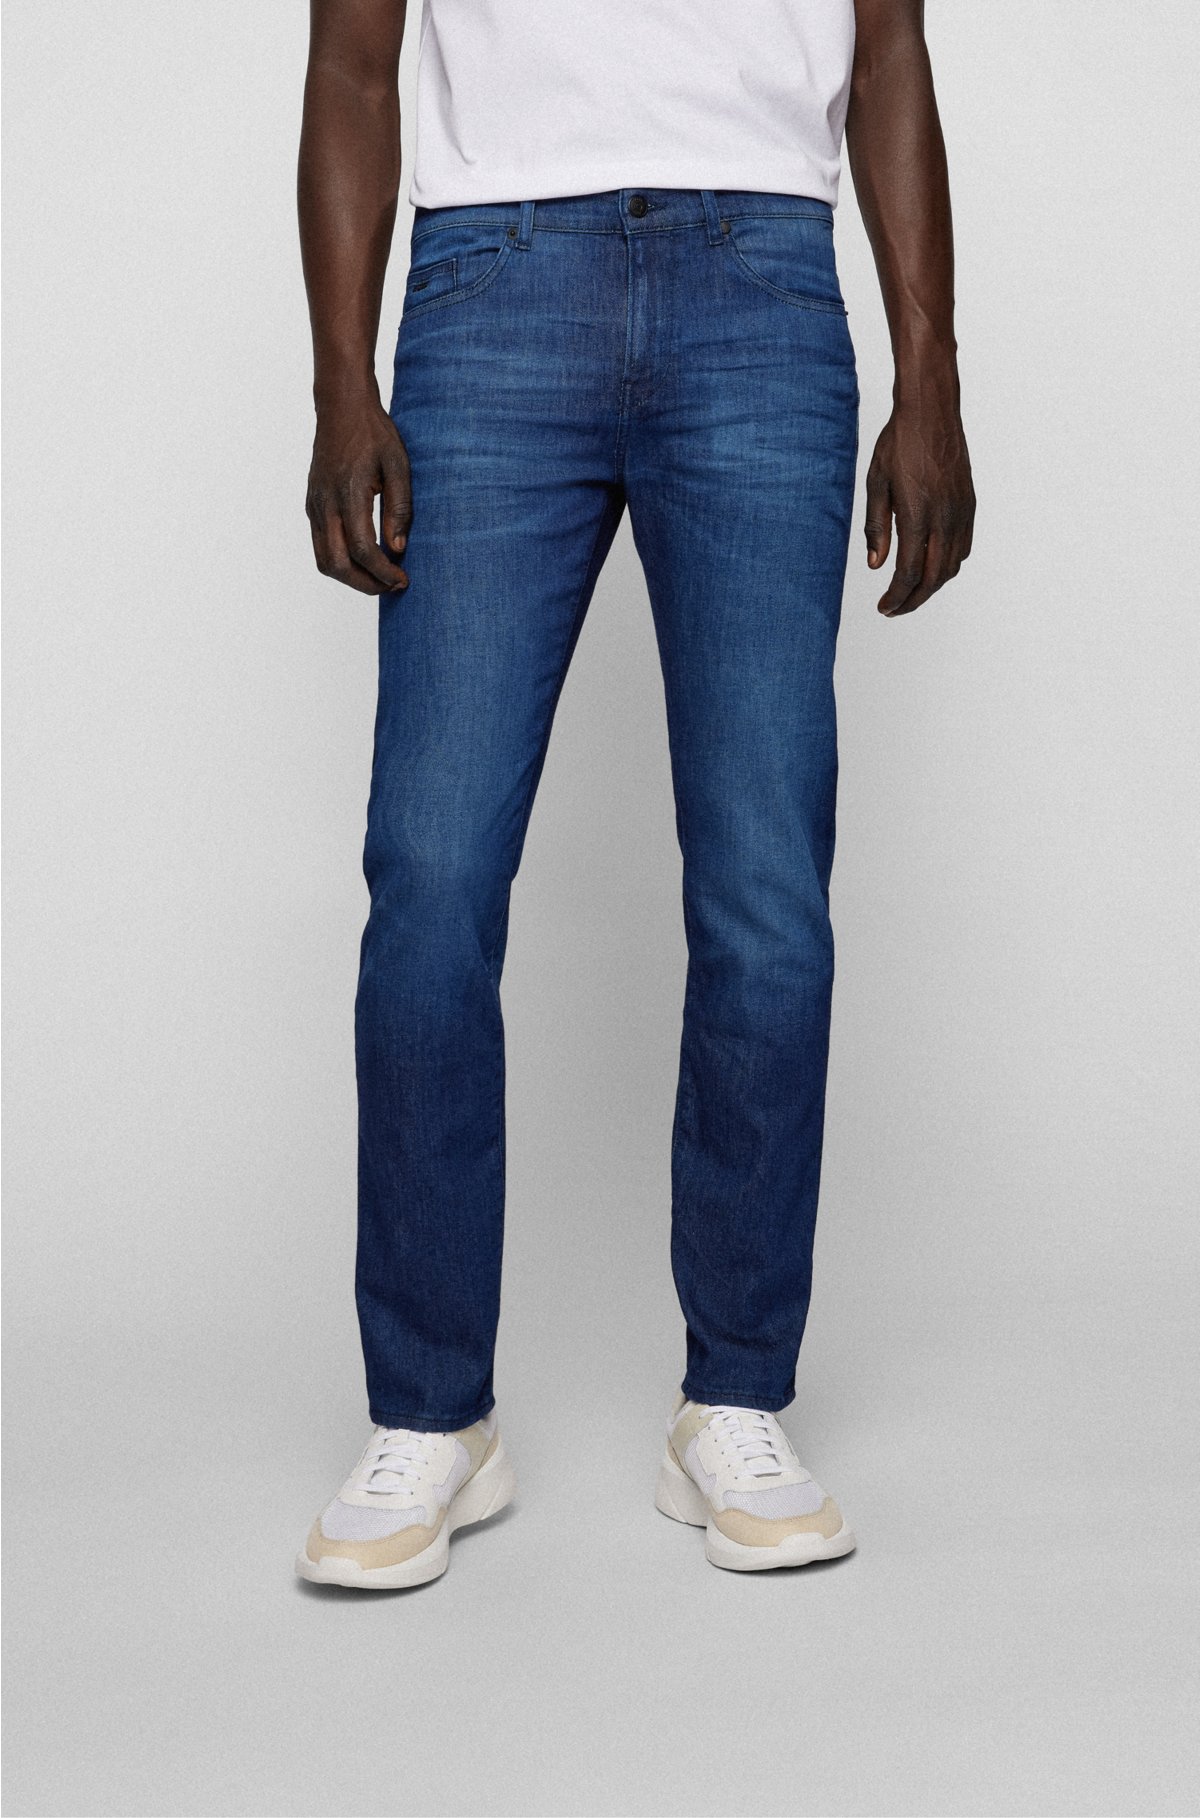 præcedens kasket sfærisk BOSS - Slim-fit jeans in blue Italian lightweight denim